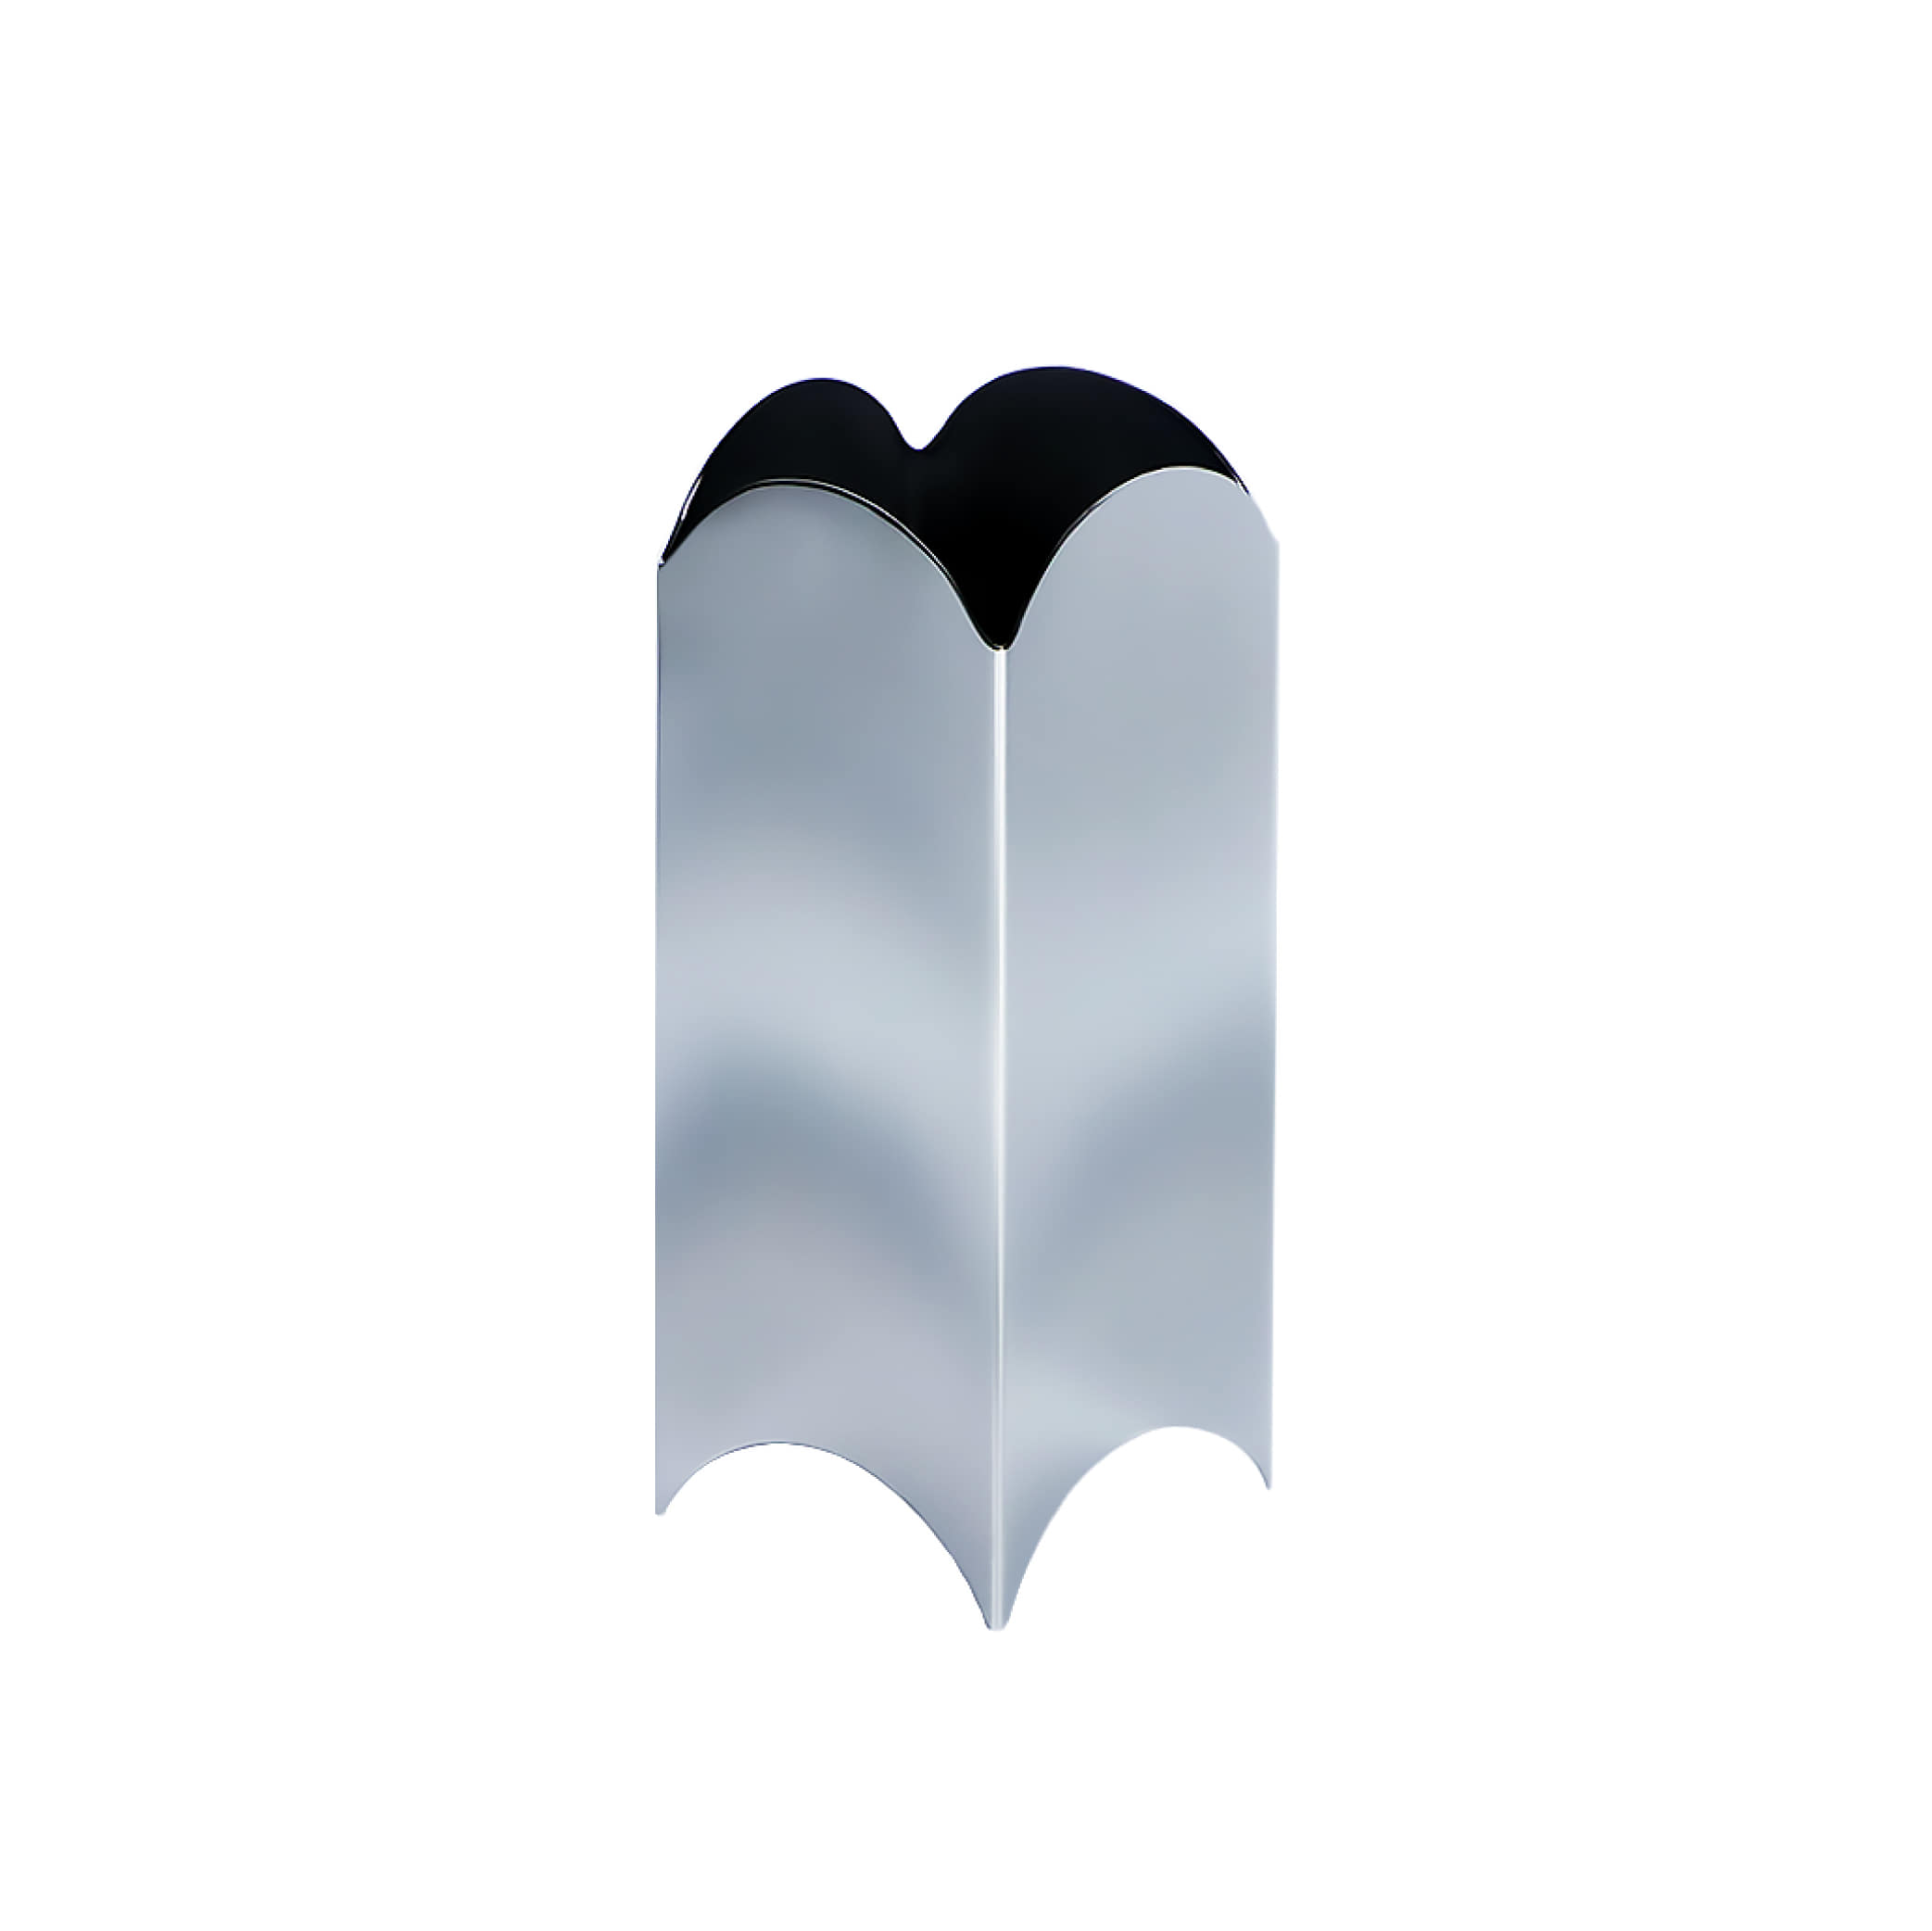 PALMEN Vase Cover  팔멘 베이스커버 01 (Silver)